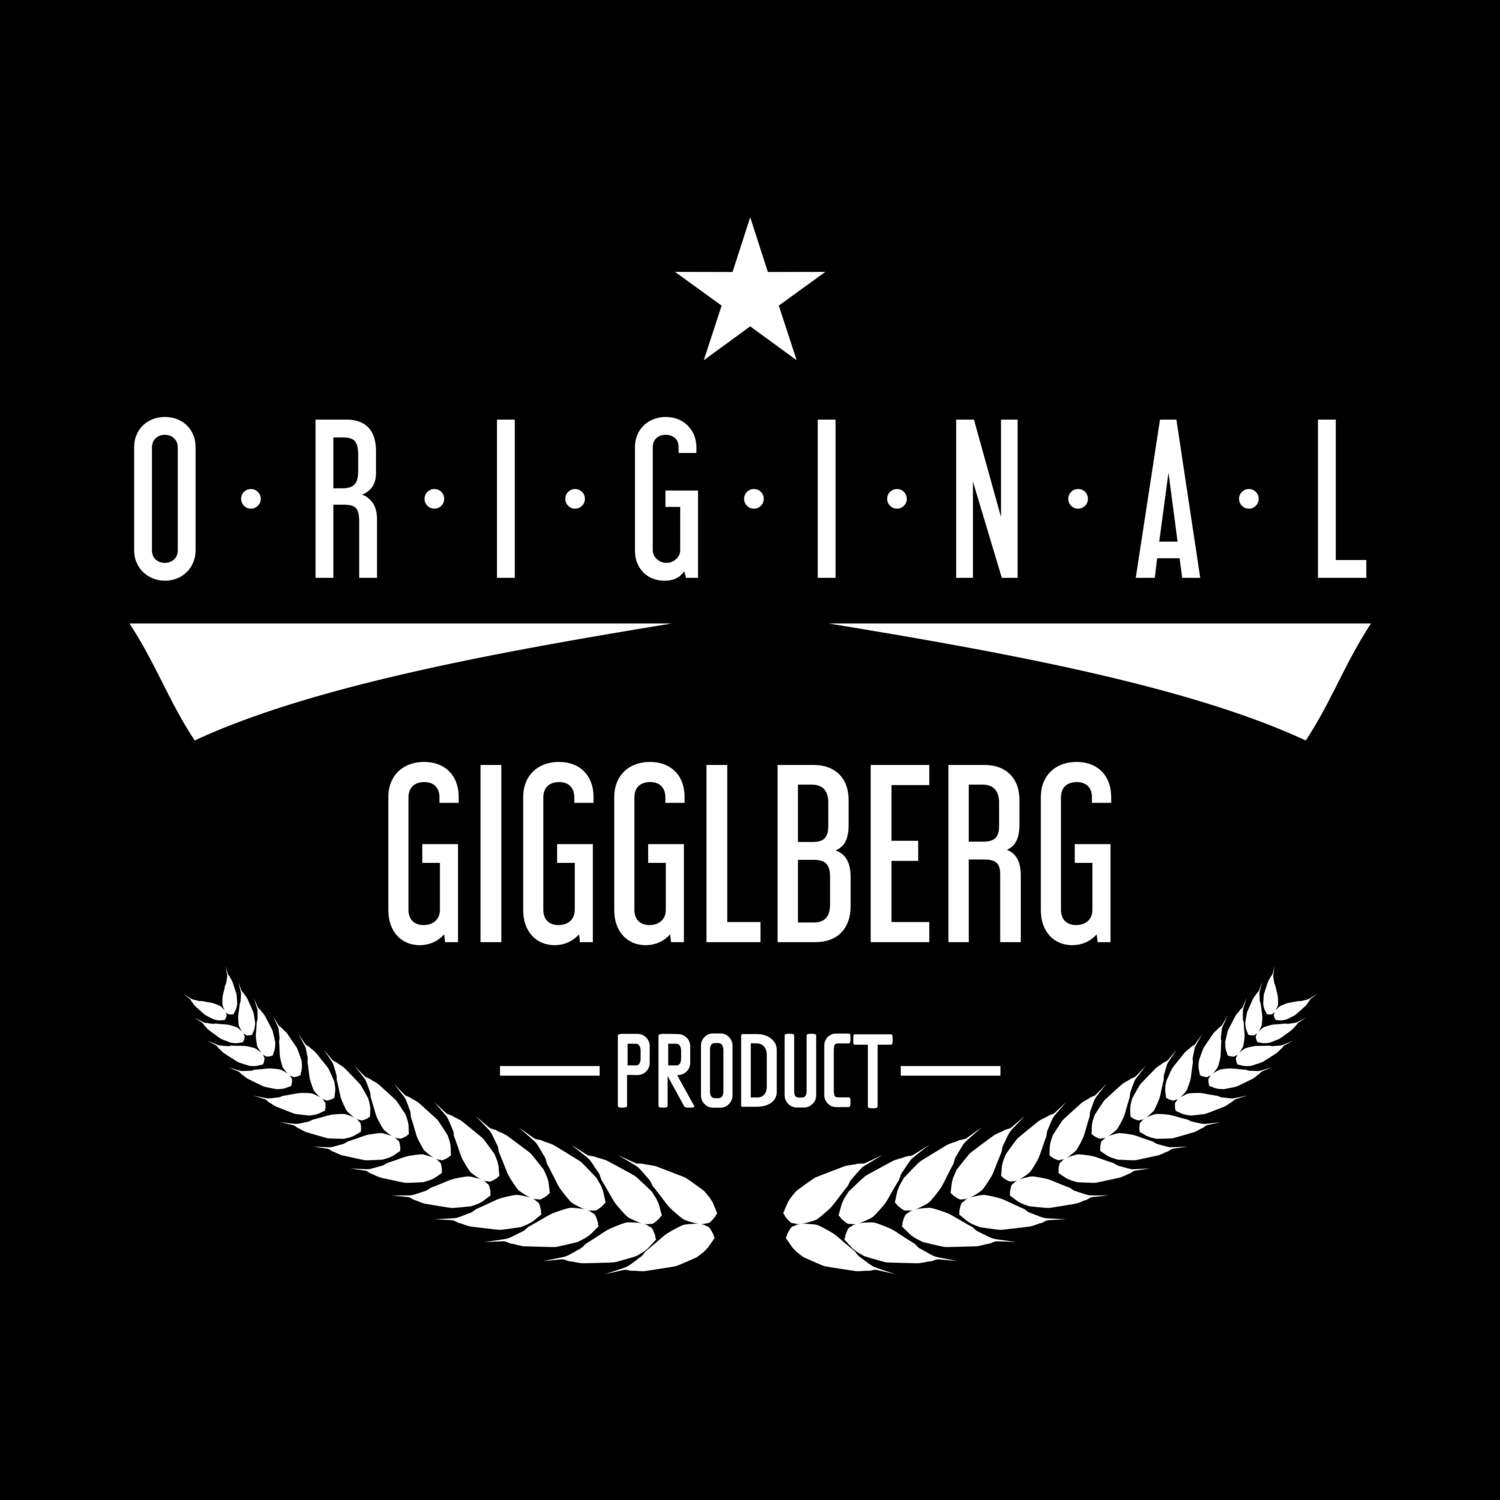 Gigglberg T-Shirt »Original Product«